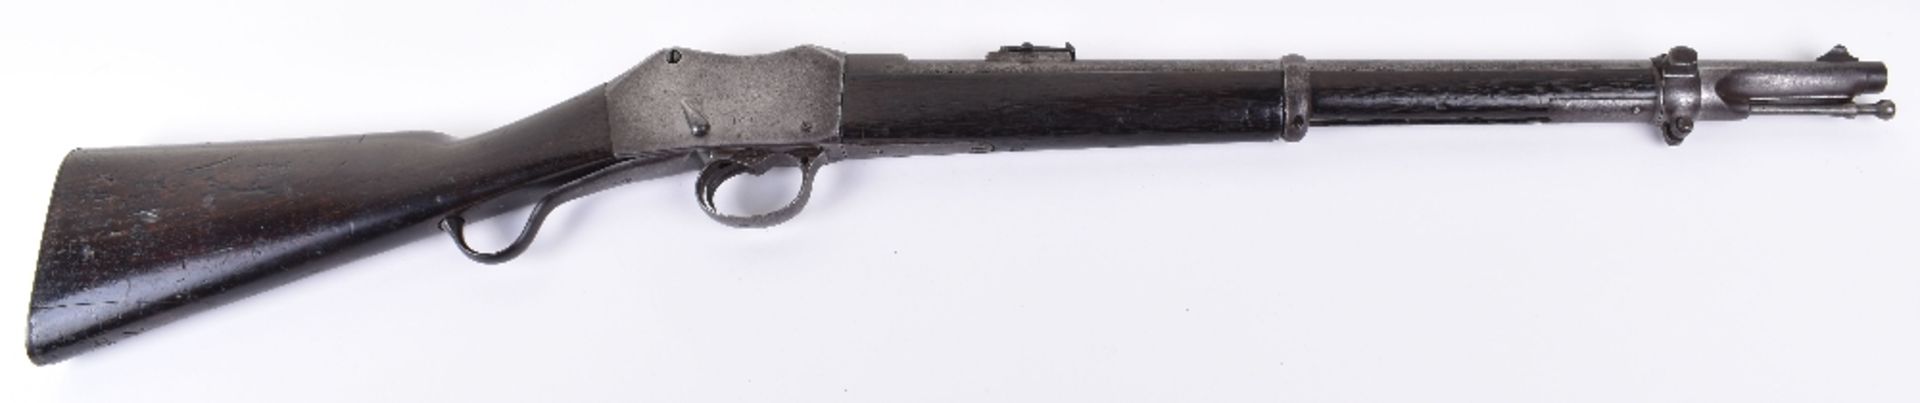 A .477/.550 Martini-Henry I.C.1 cavalry carbine